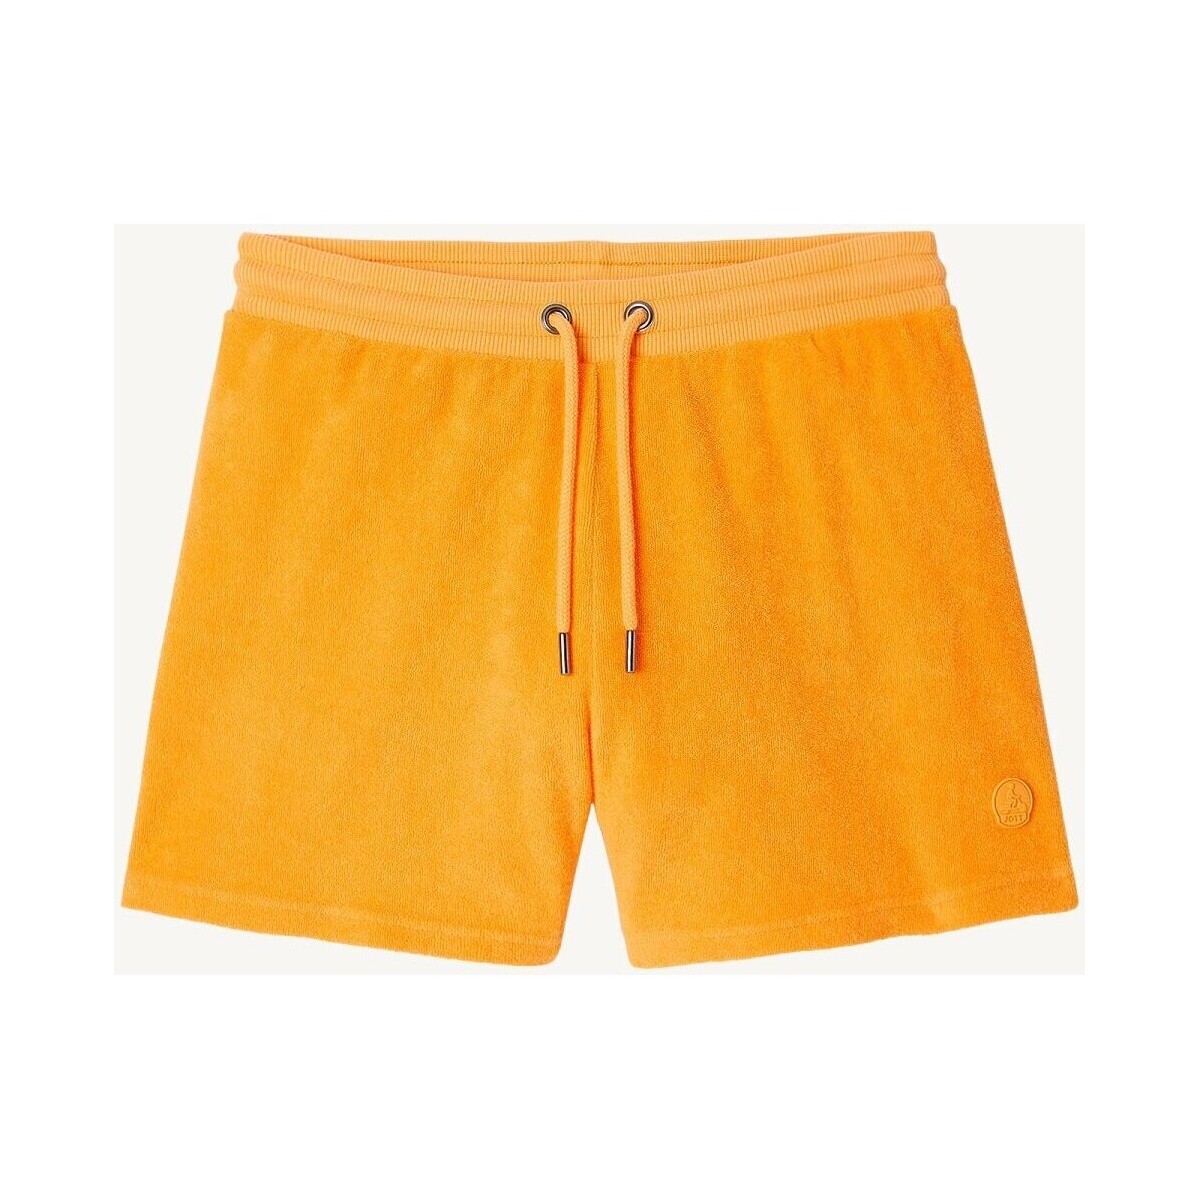 textil Shorts / Bermudas JOTT ALICANTE - Mujer Naranja